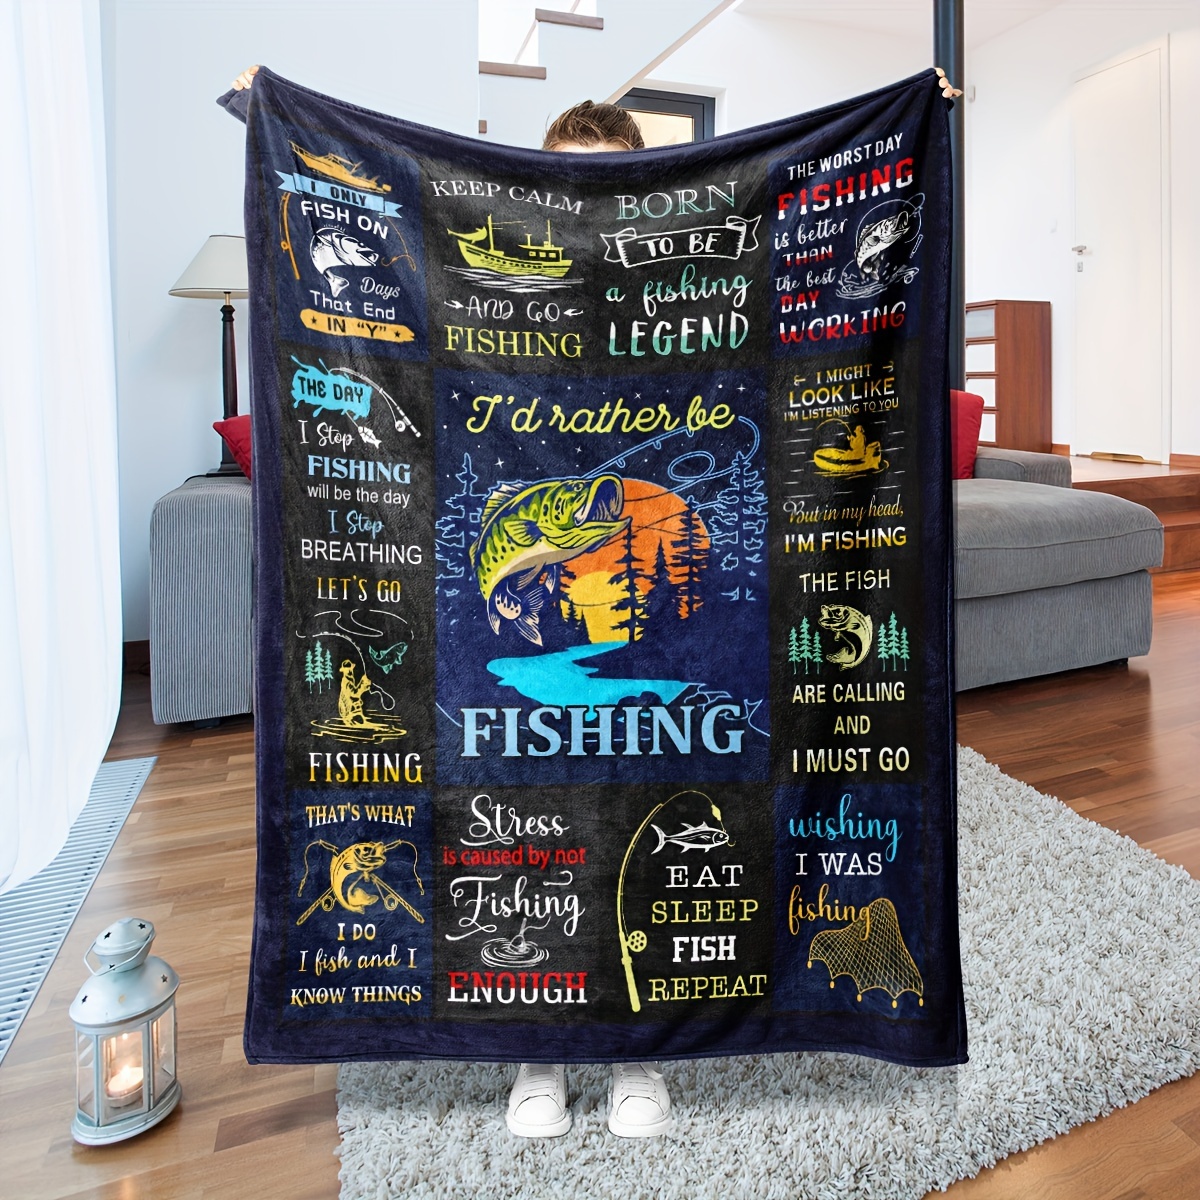 Fishing Hoodie, I'd Rather Be Fishing Hoodie, Fisherman Hoodie, Gift for Fishing  Man, Gift for Fishing Lovers 